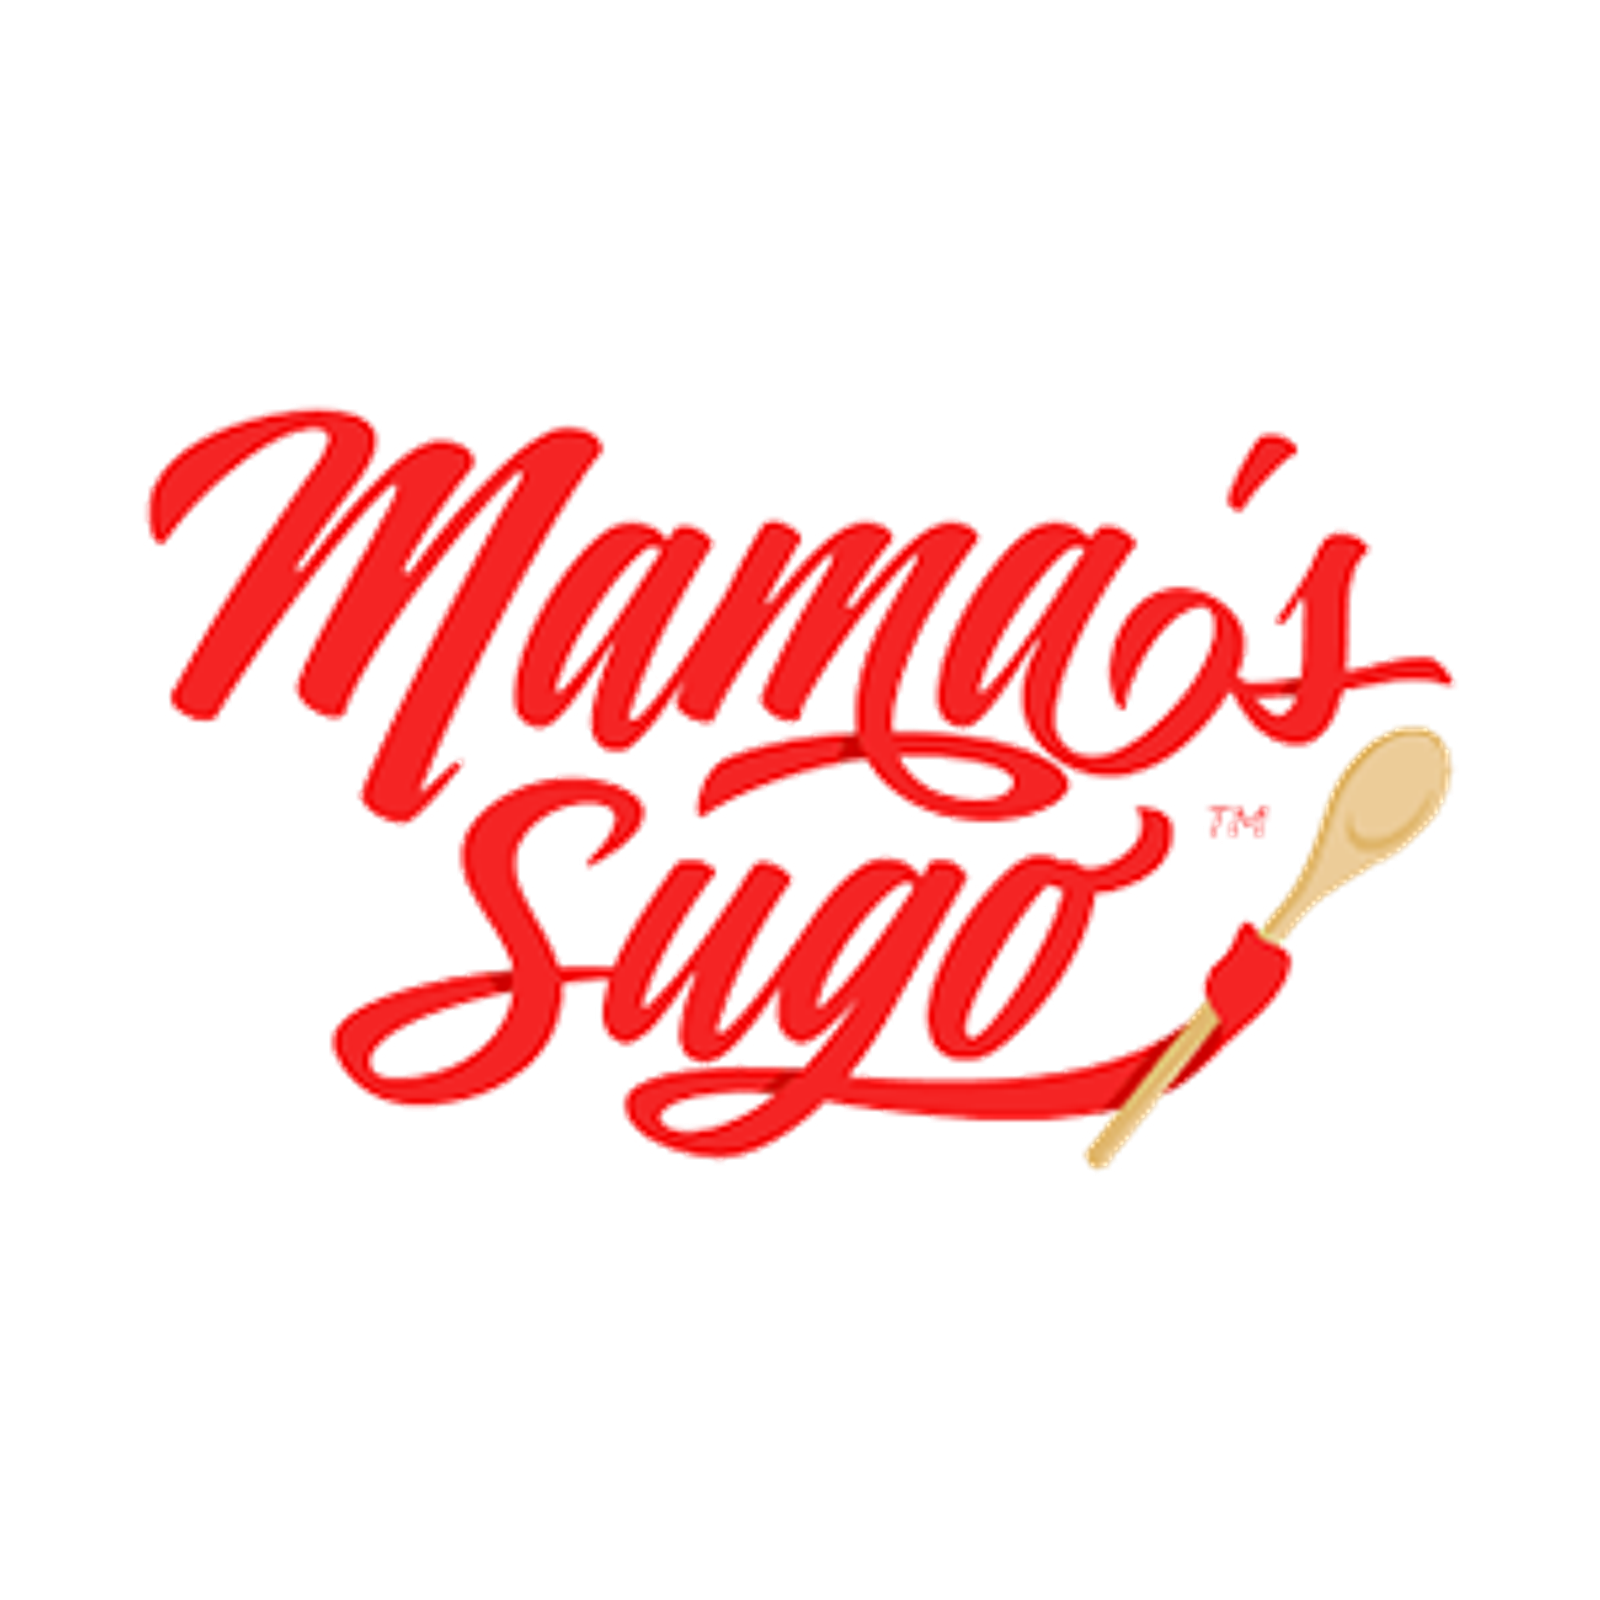 Mama's Sugo